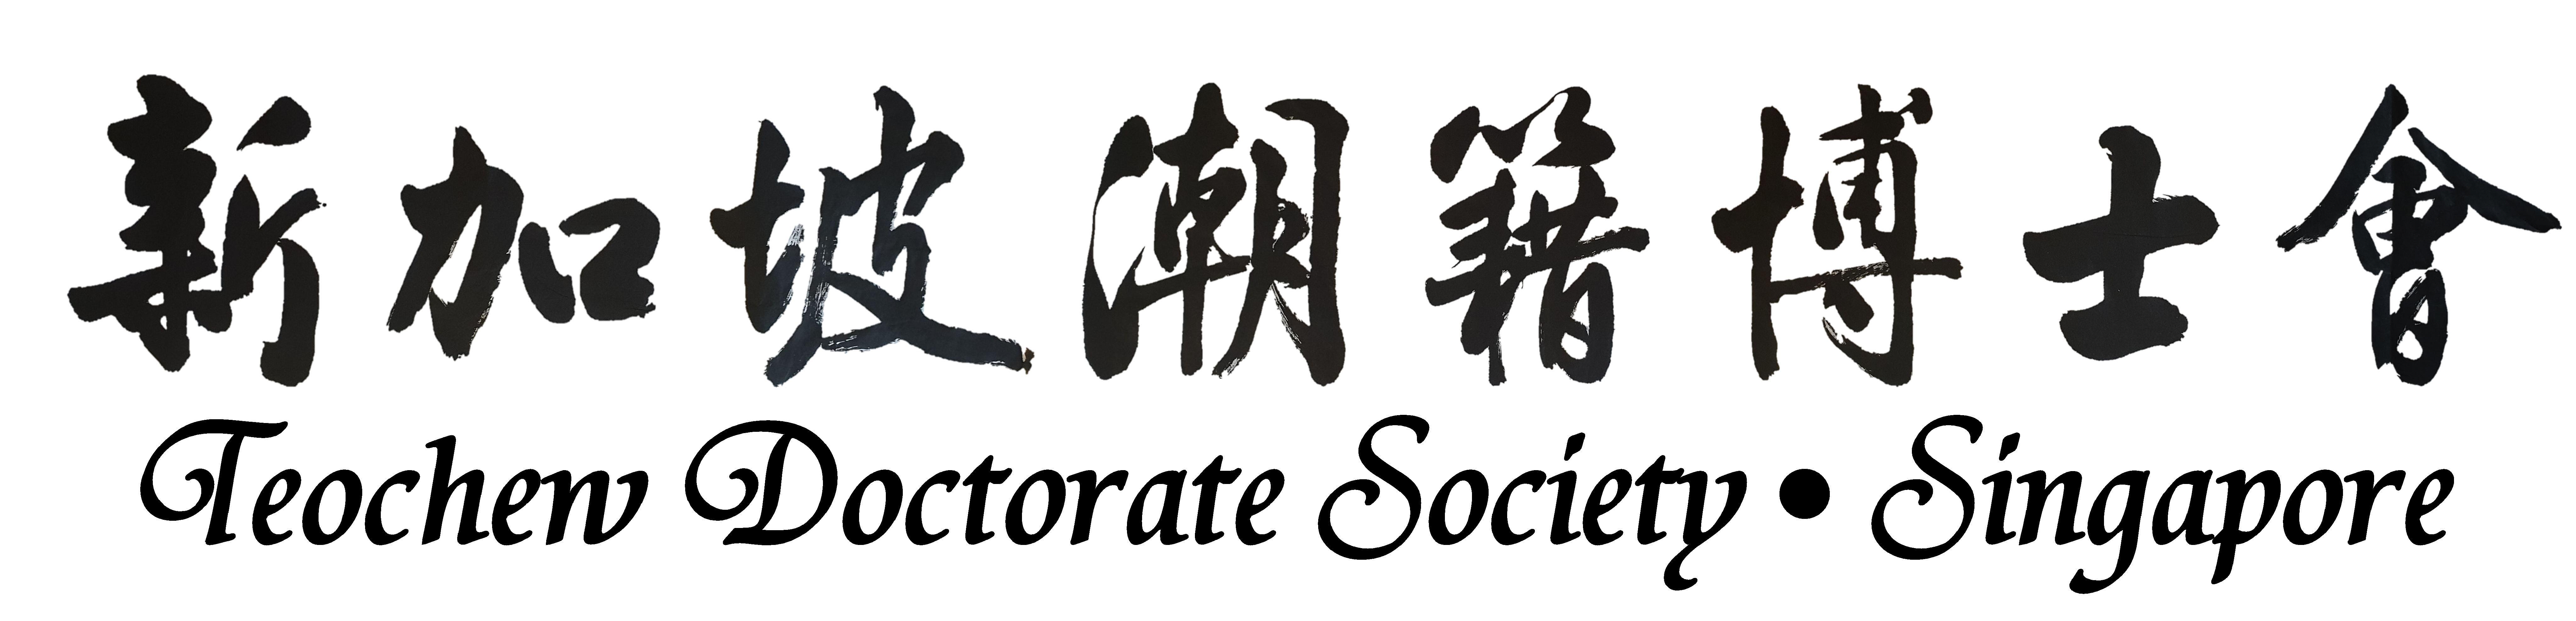 Teochew Doctorate Society, Singapore